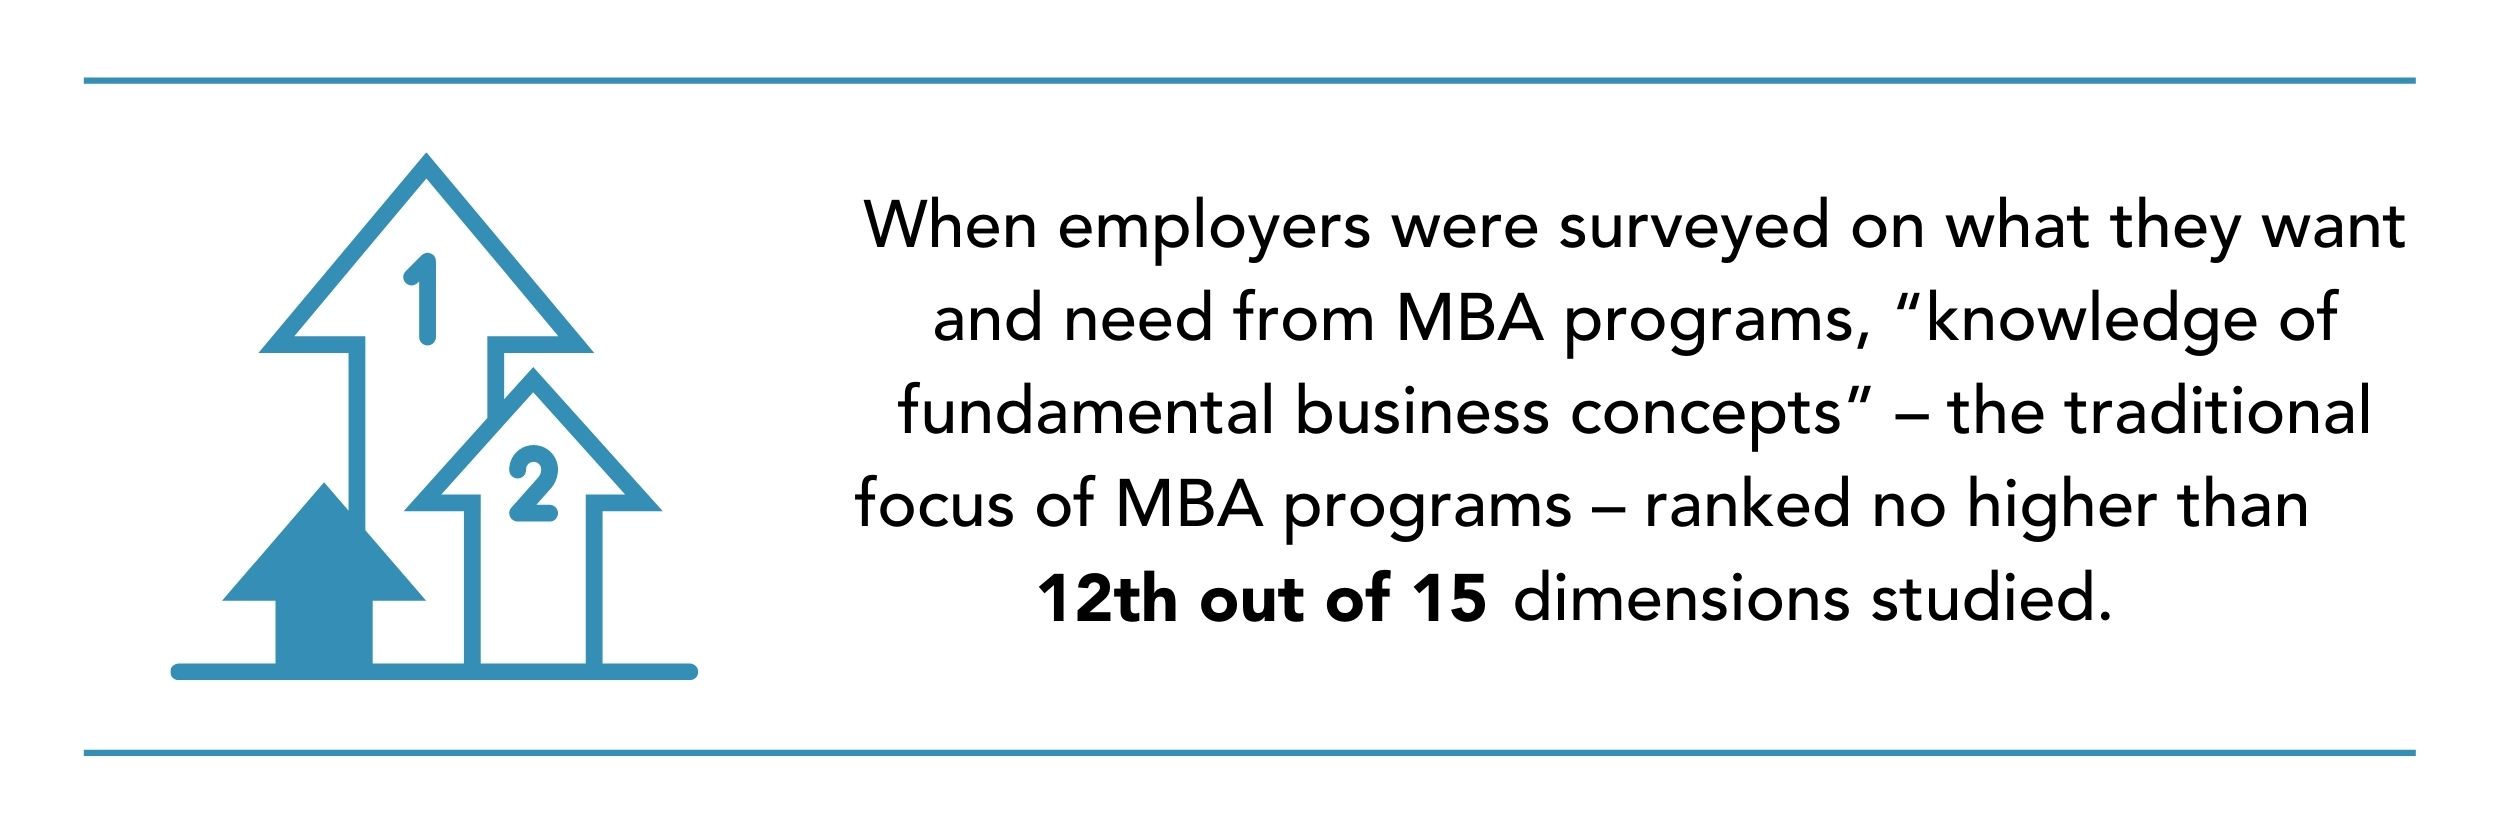 MBA program dimensions